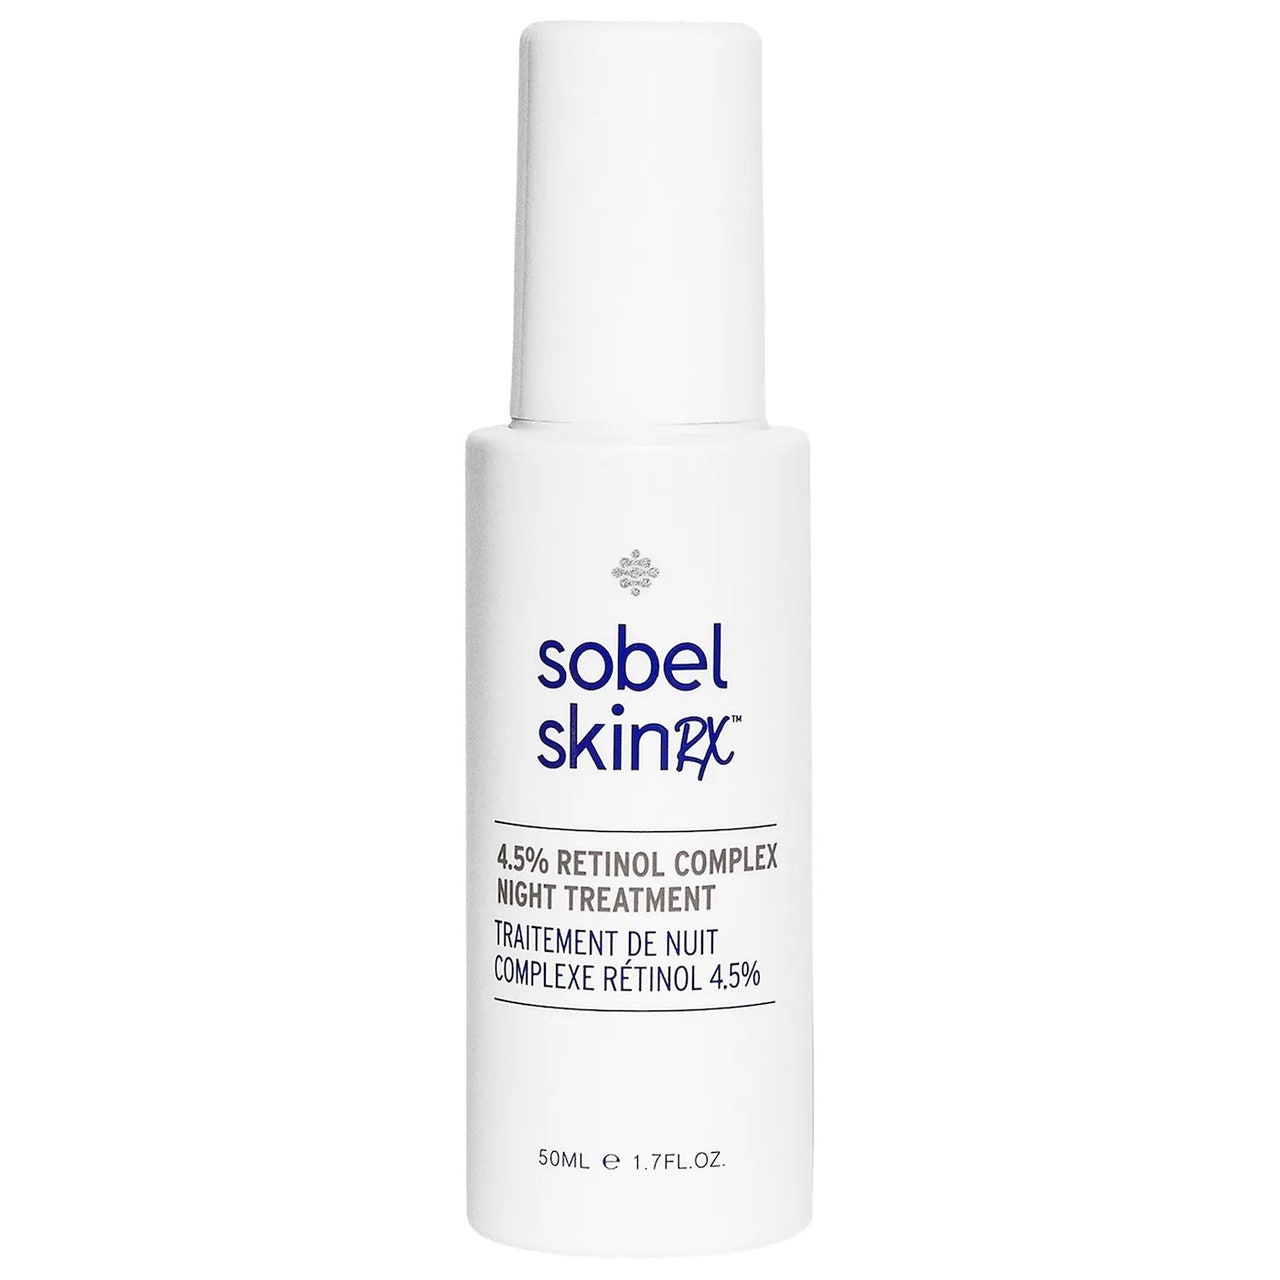 Sobel Skin Rx 4.5% Retinol Night Treatment on white background